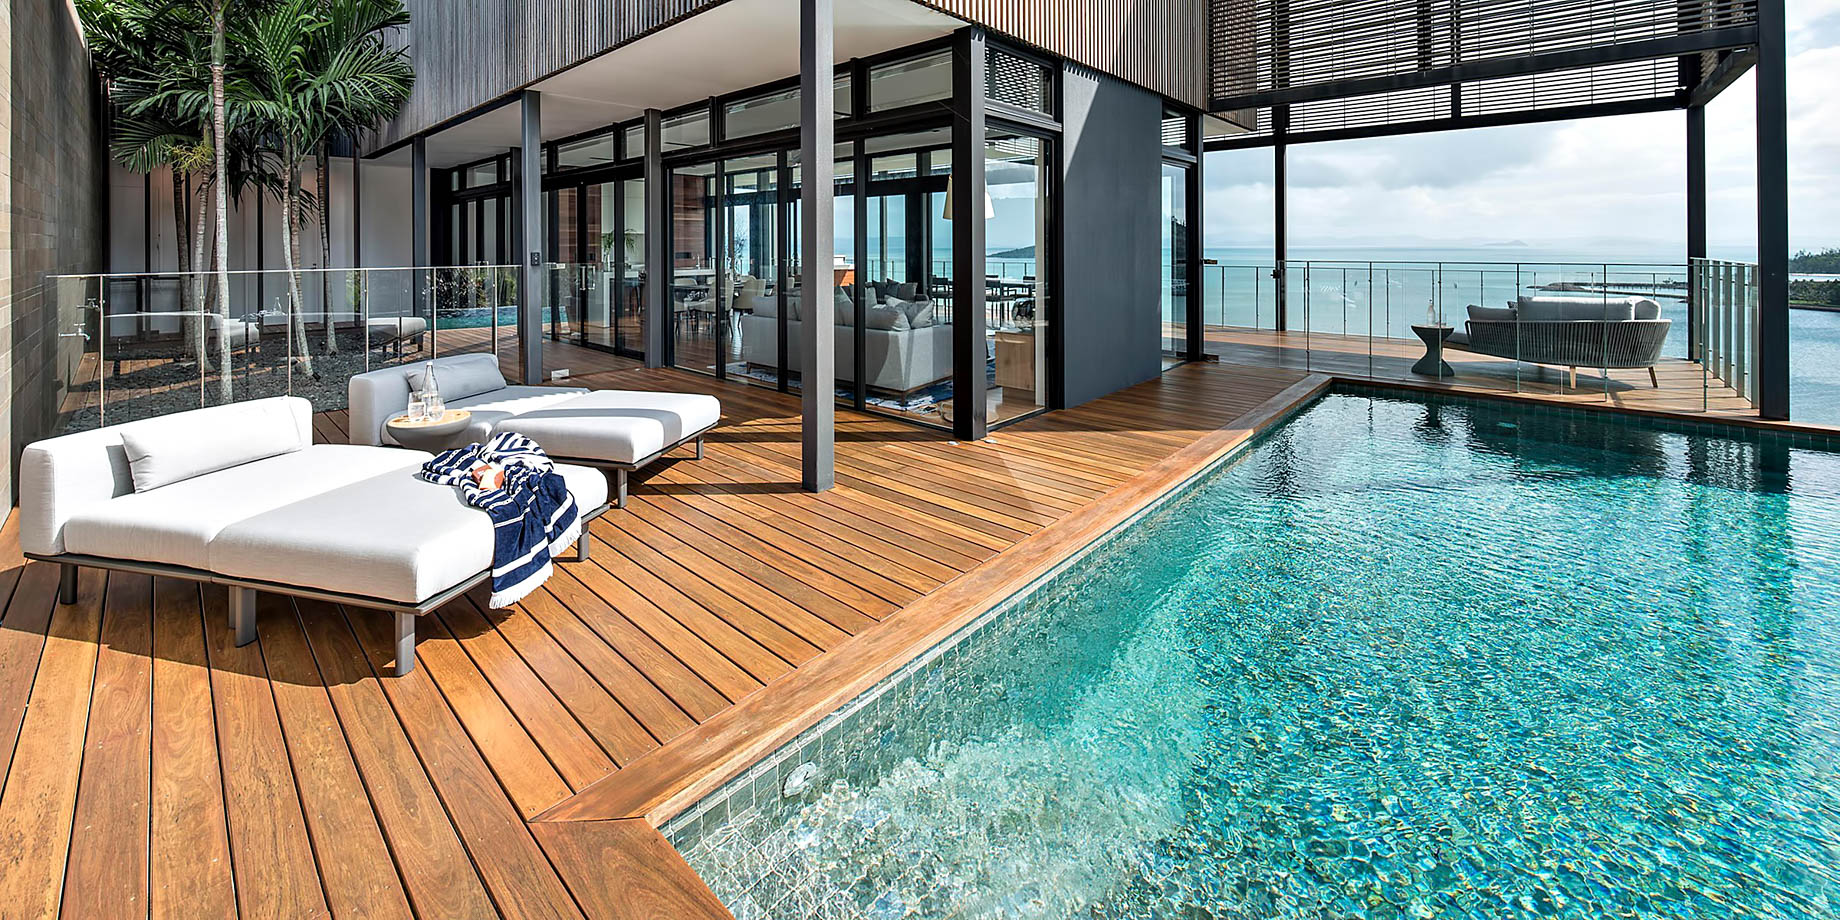 InterContinental Hayman Island Resort – Whitsunday Islands, Australia – Hayman Estate Residence Infinity Pool Deck